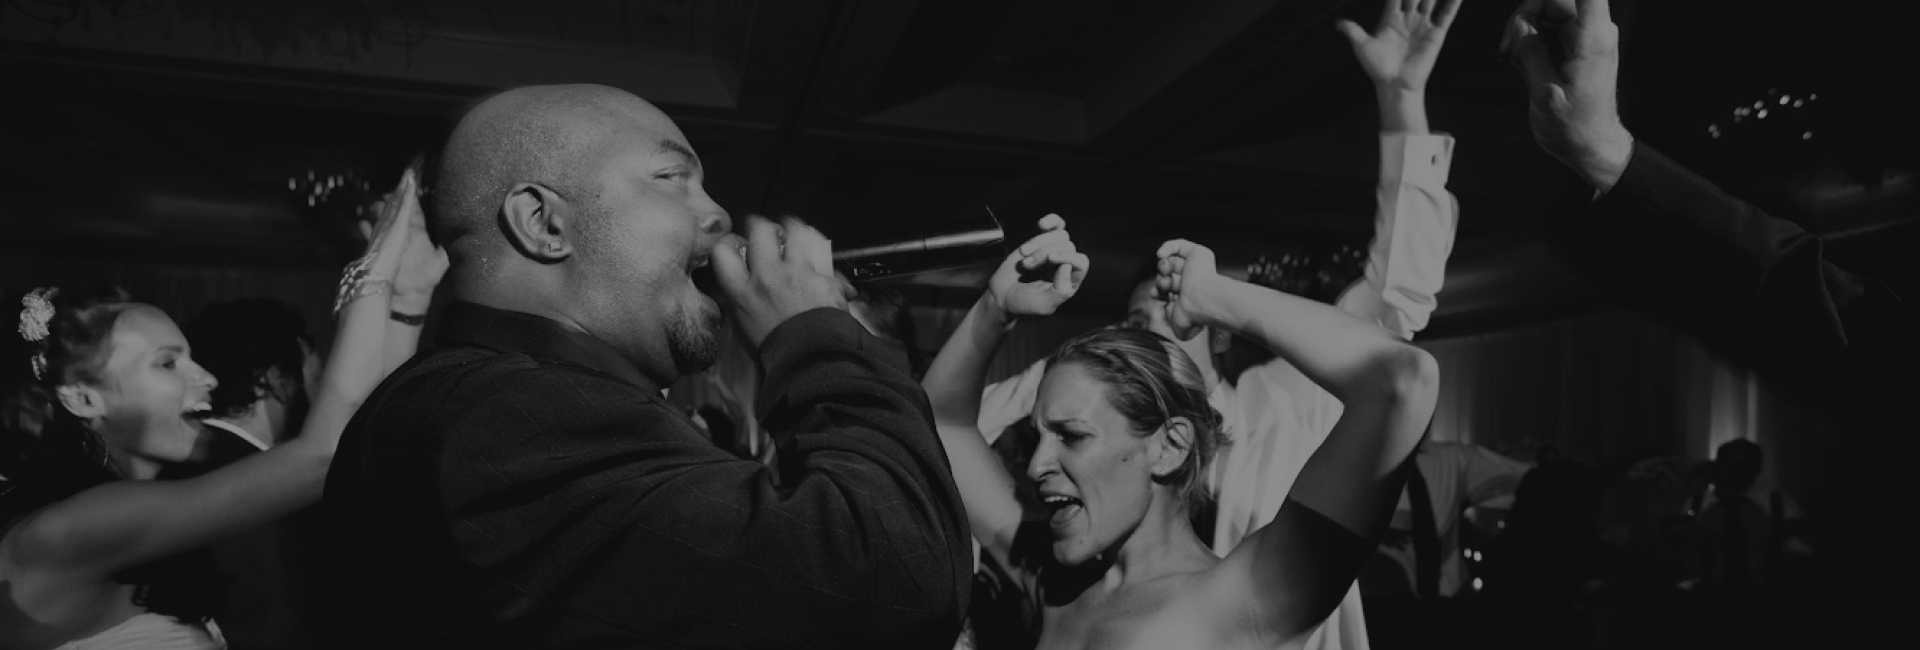 musician singing at a wedding